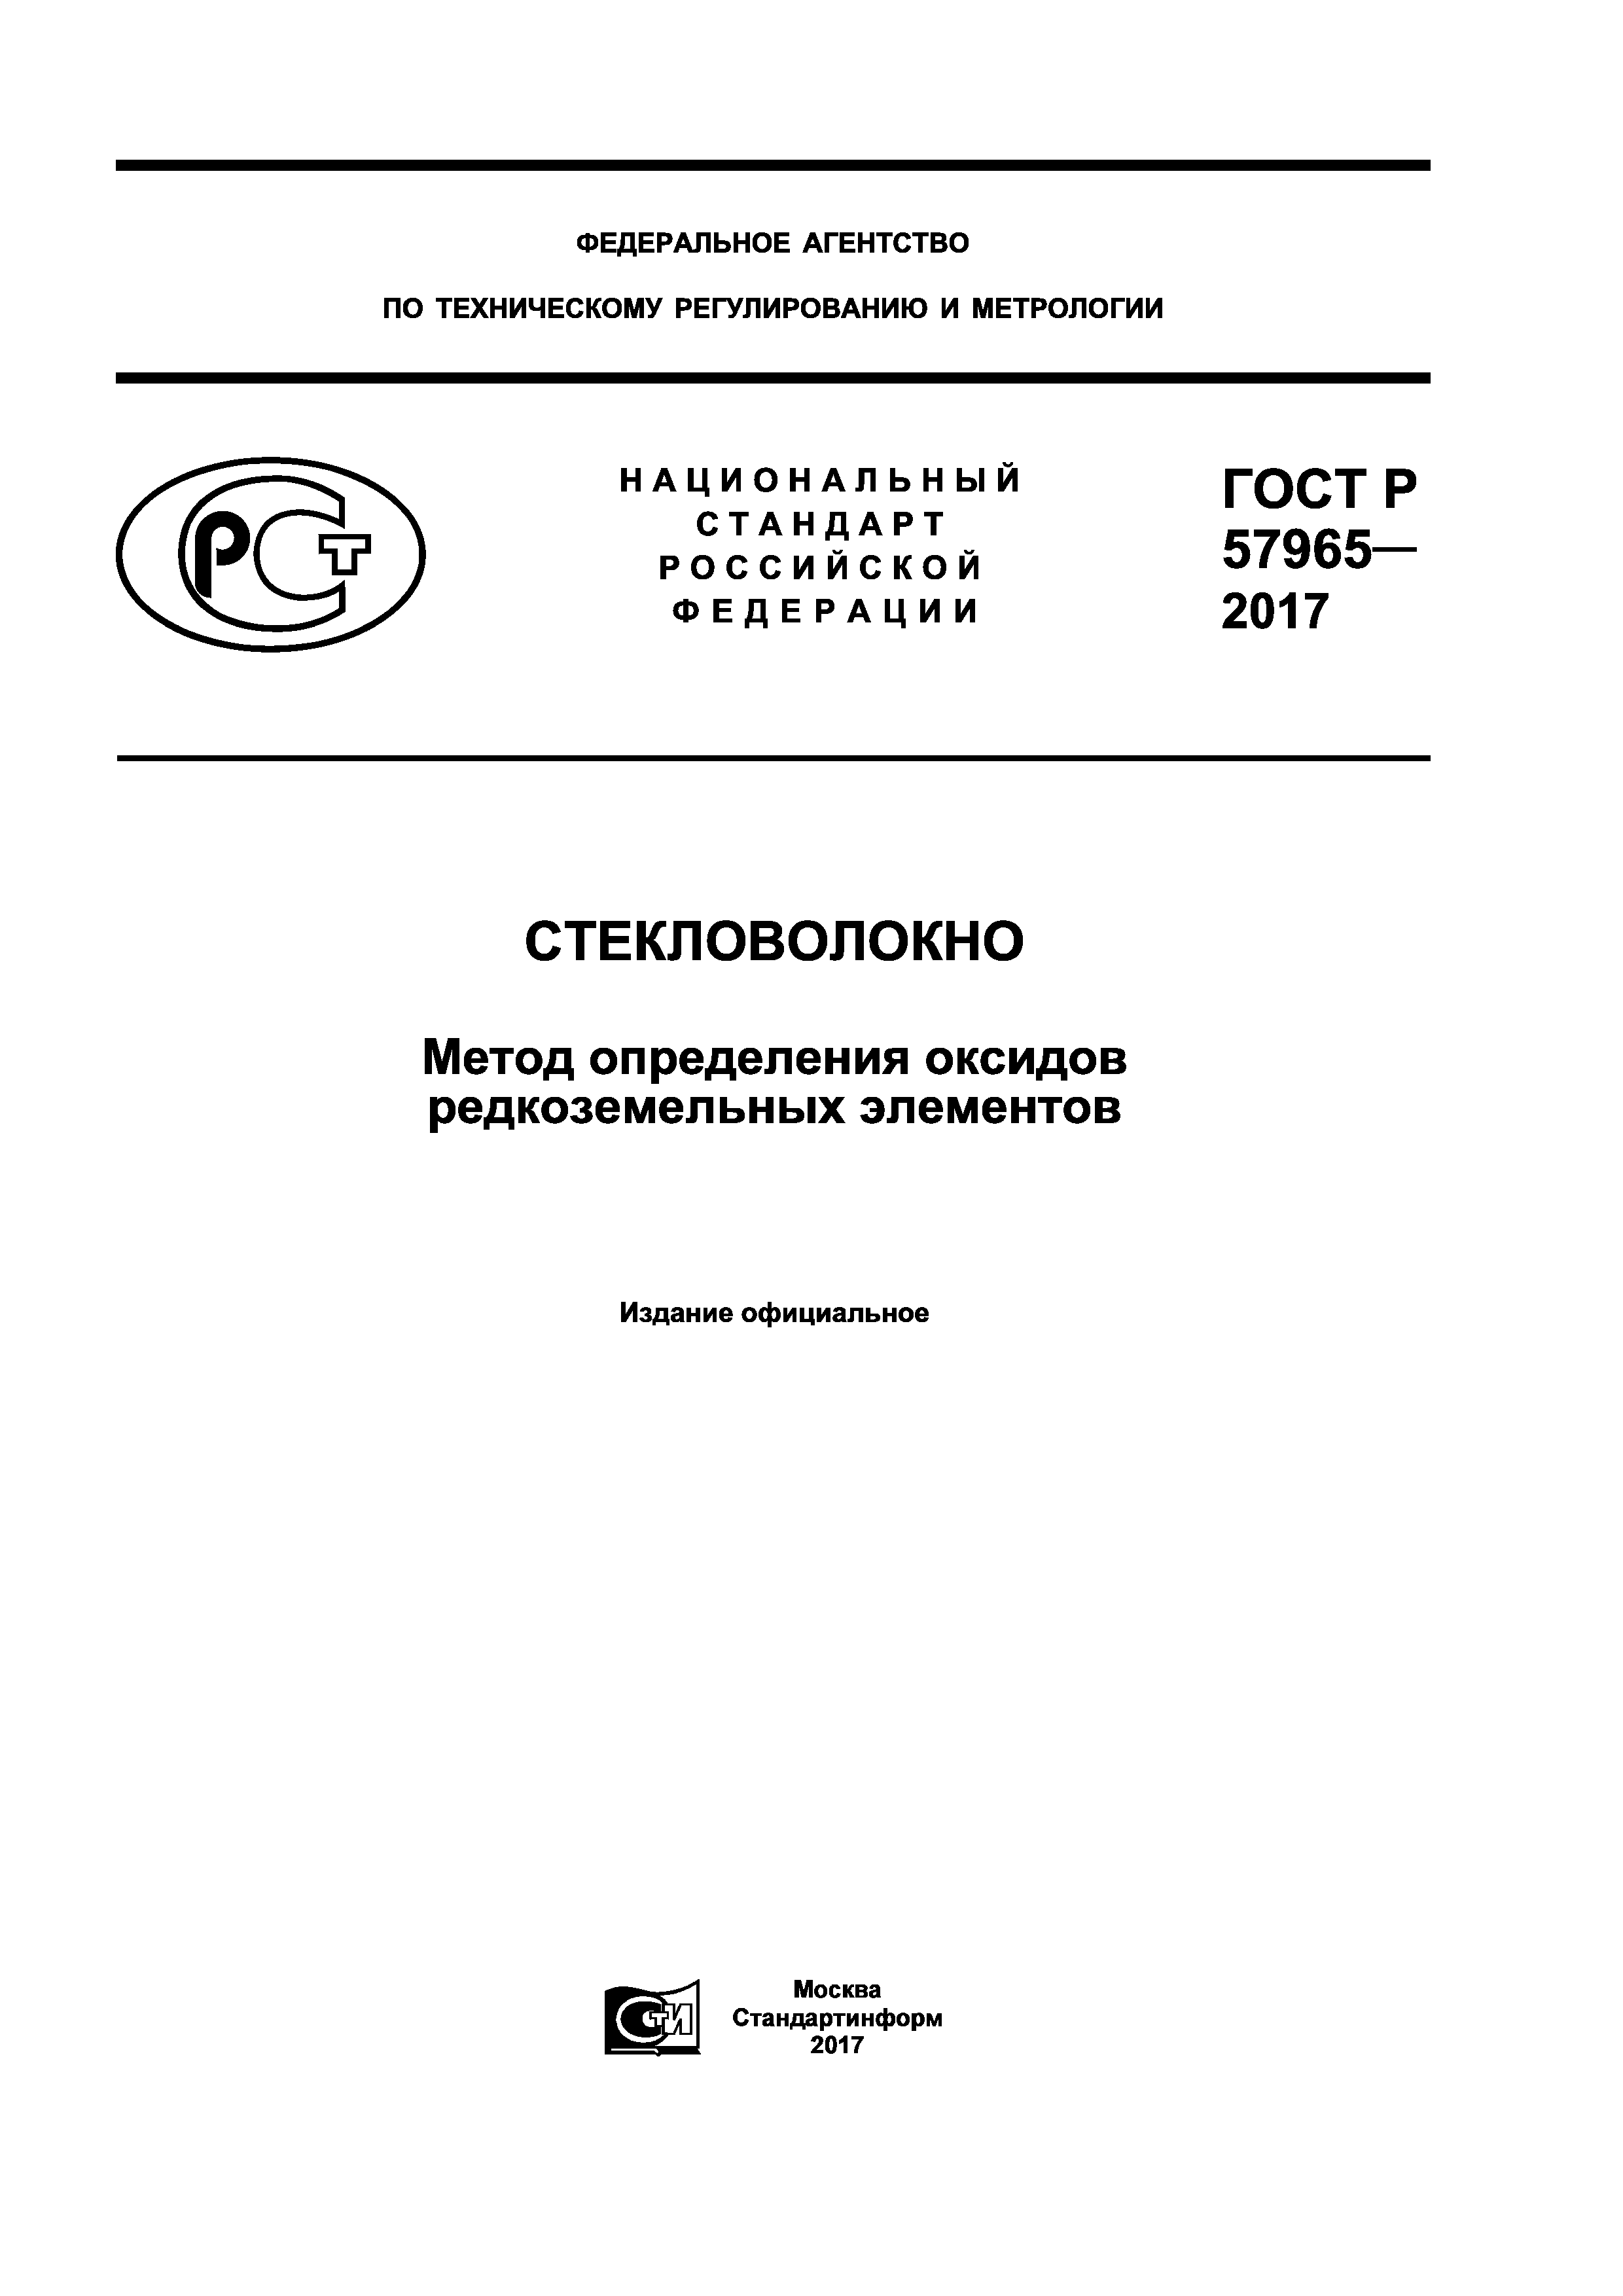 ГОСТ Р 57965-2017